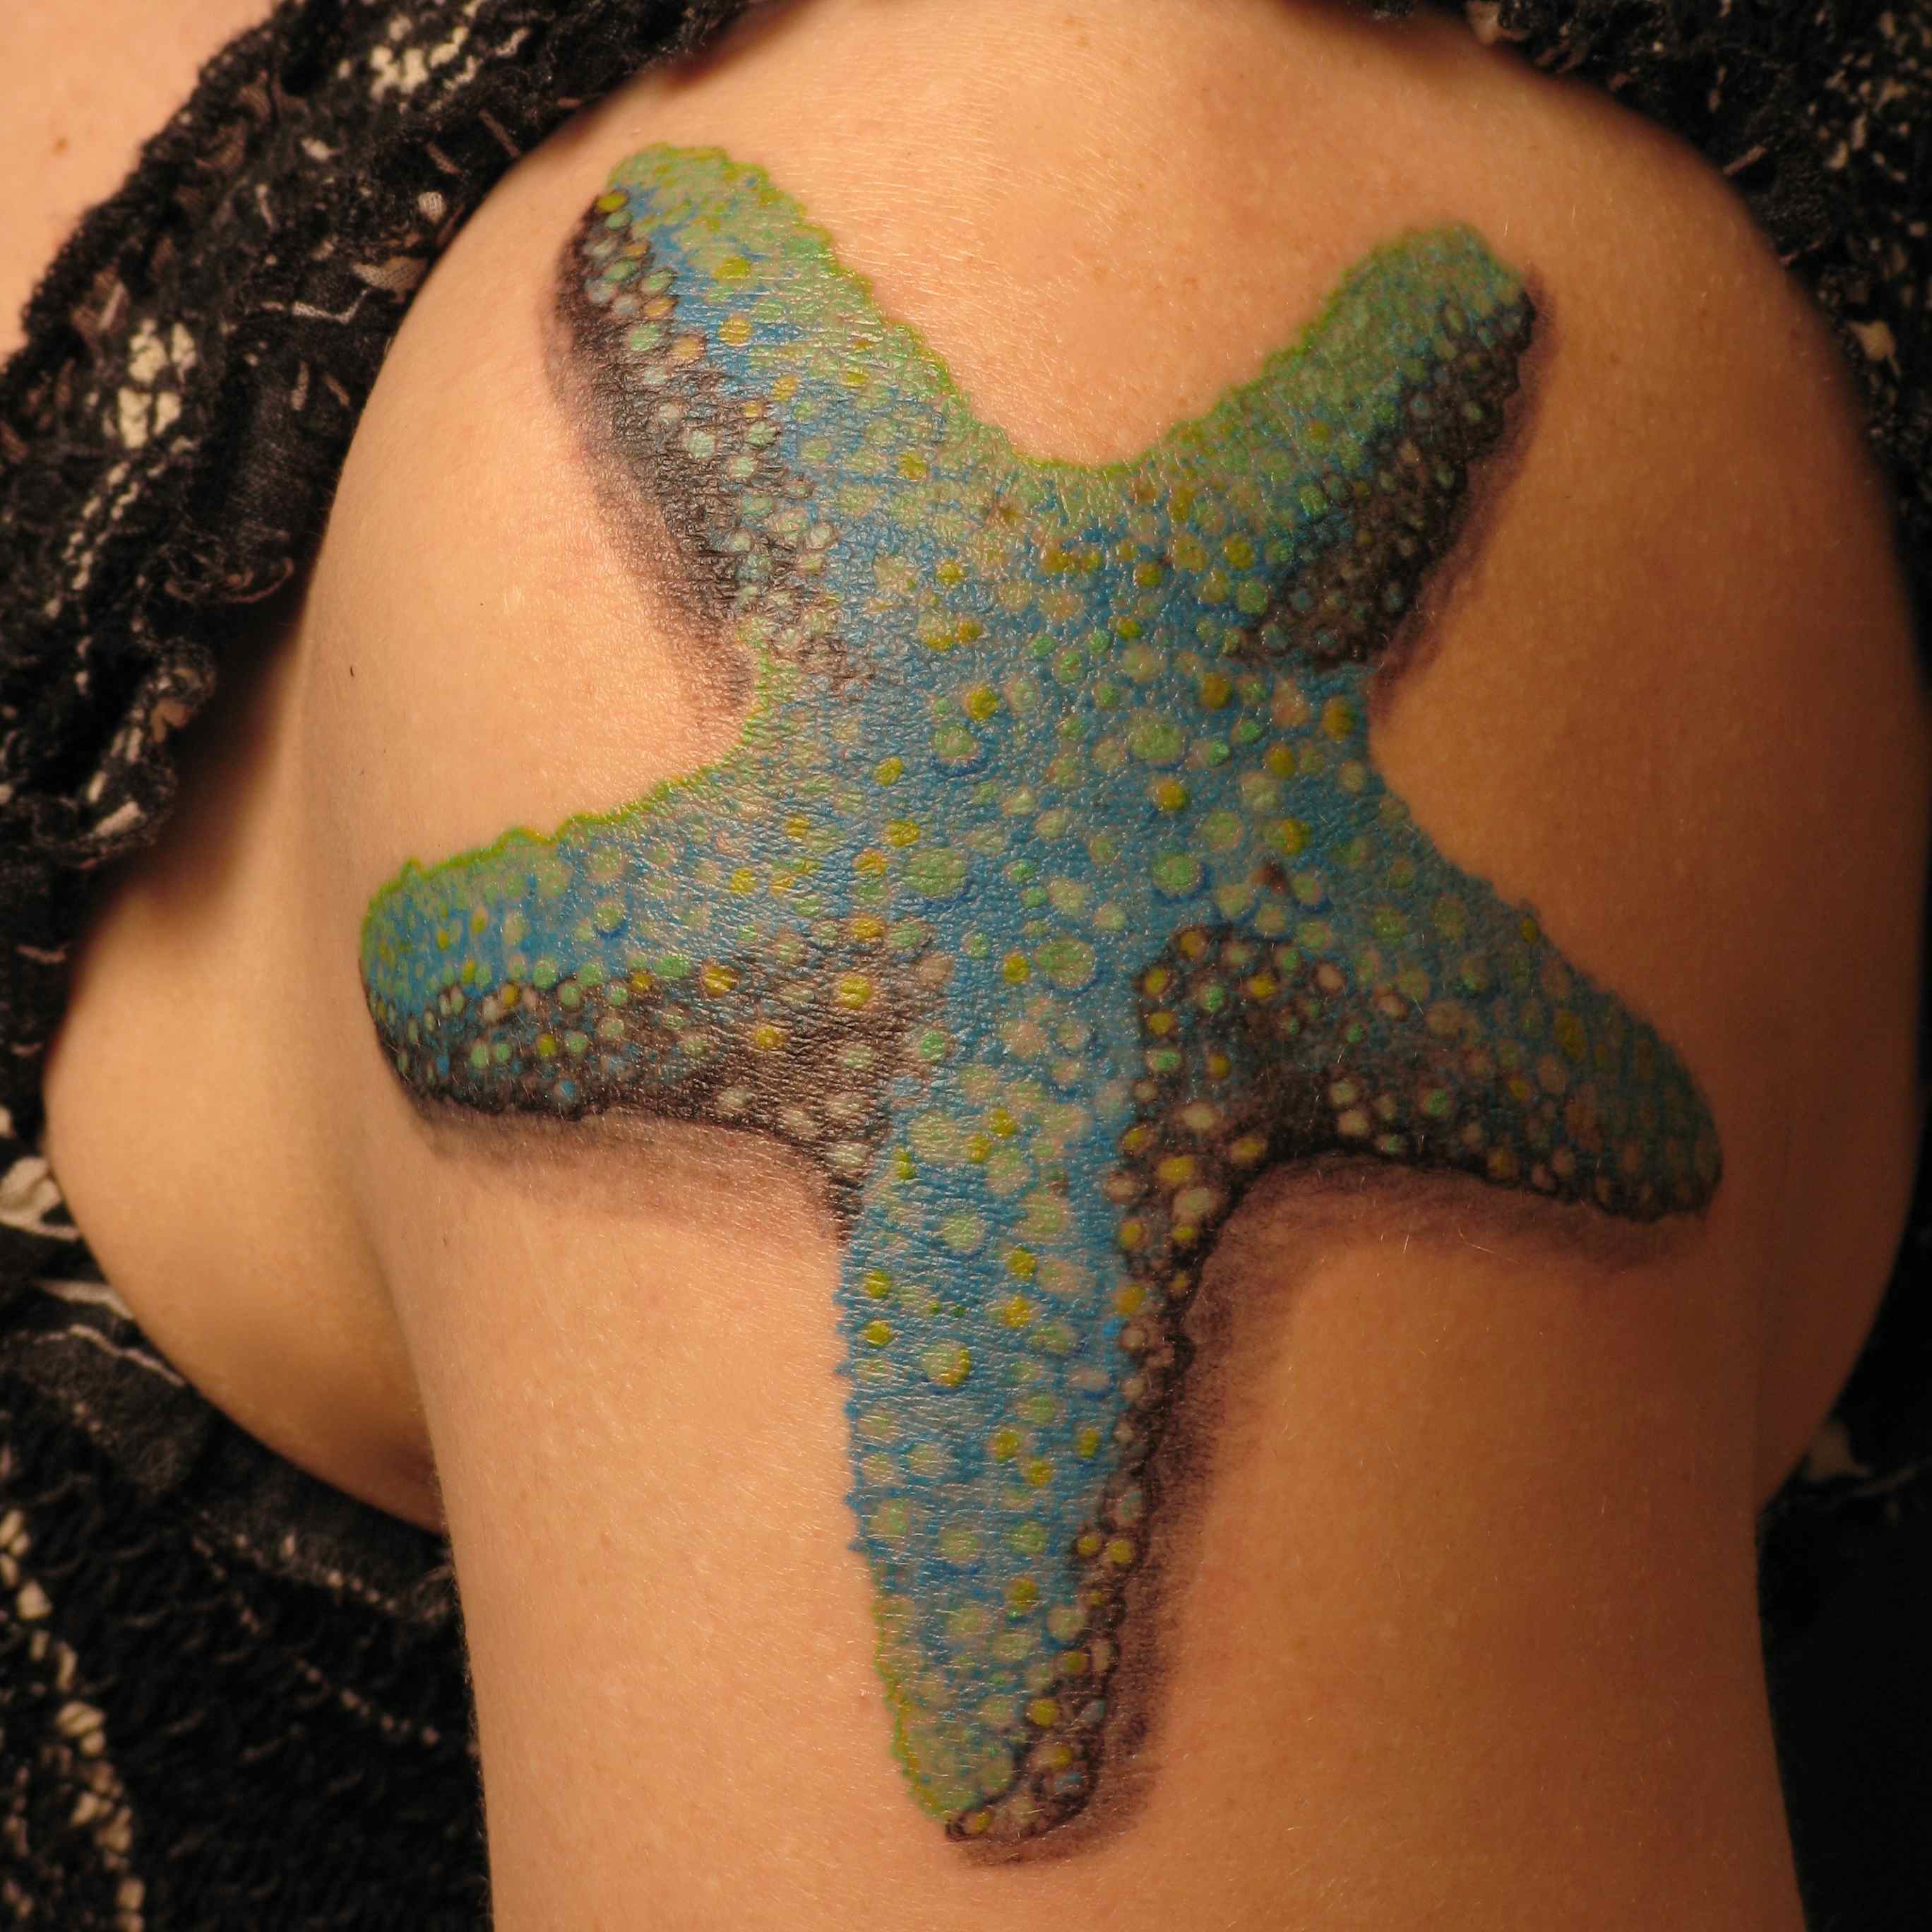 2440 Starfish Tattoo Images Stock Photos  Vectors  Shutterstock